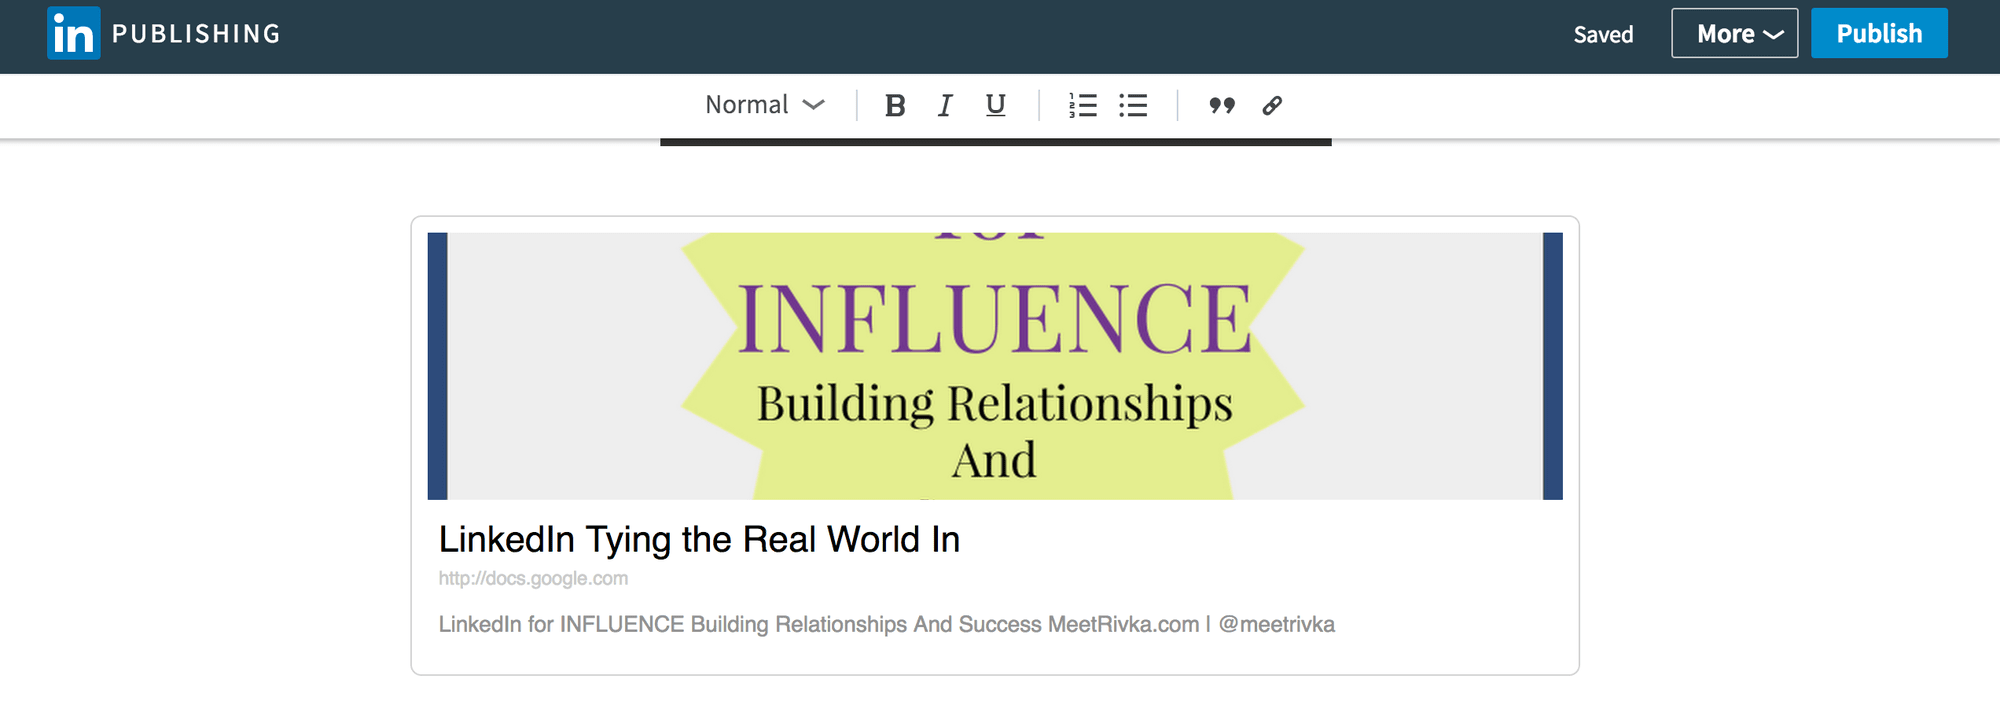 Slides display on LinkedIn Publishing